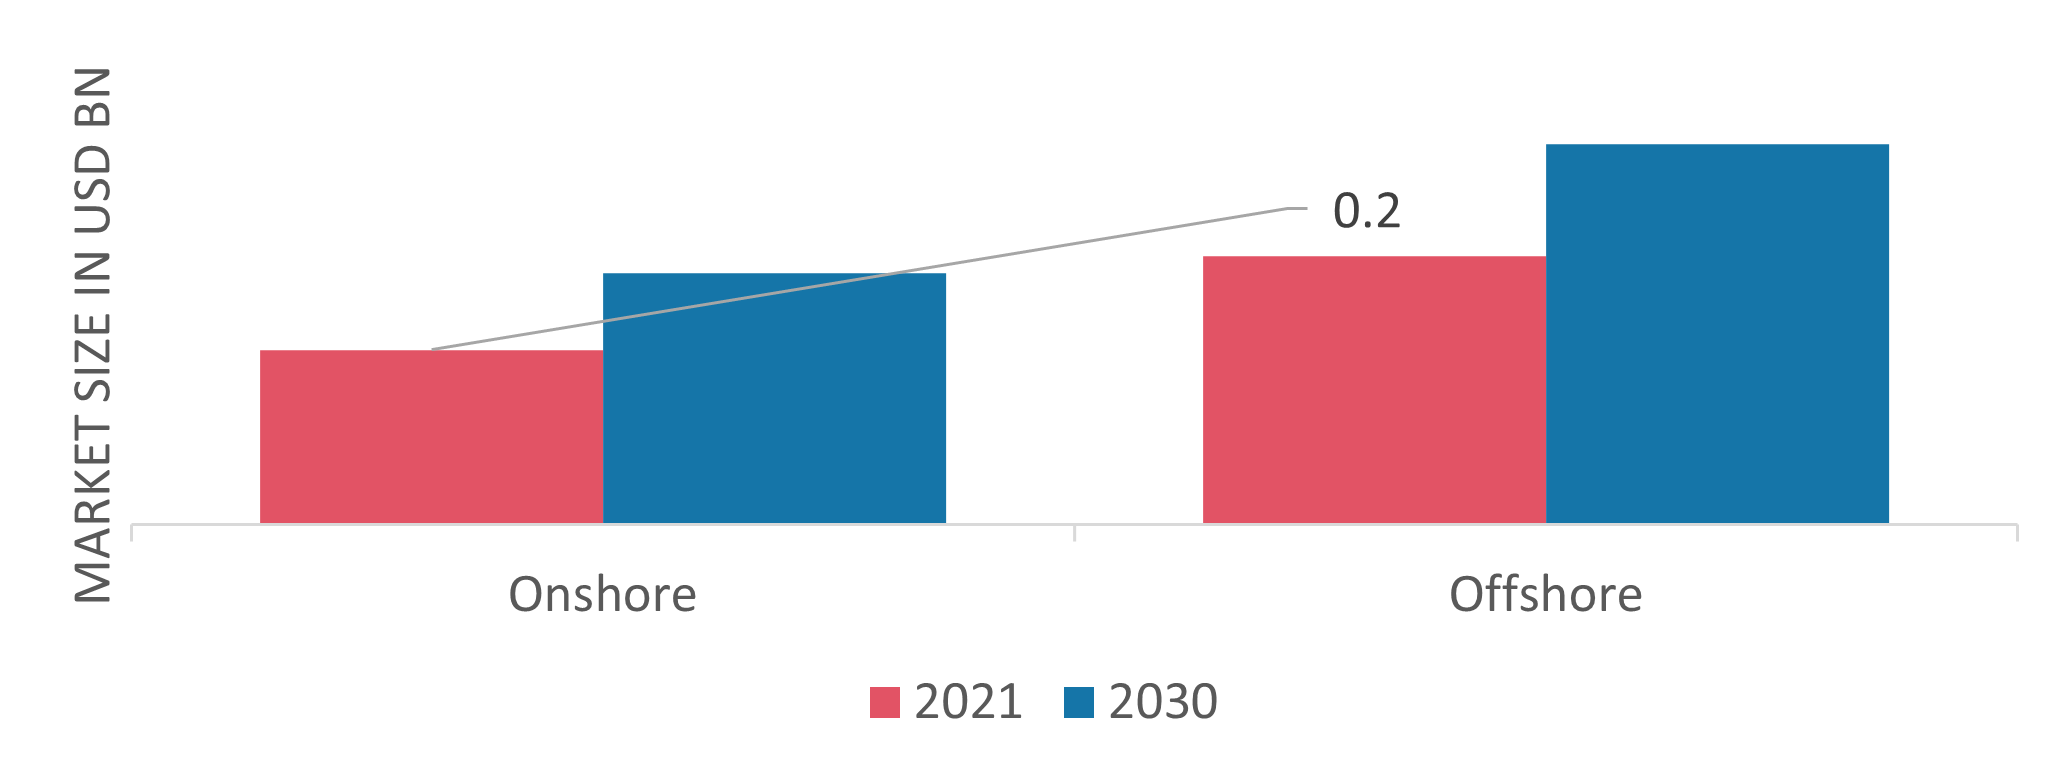 Green Hydrogen Market by Location, 2021 & 2030 (USD Billion)